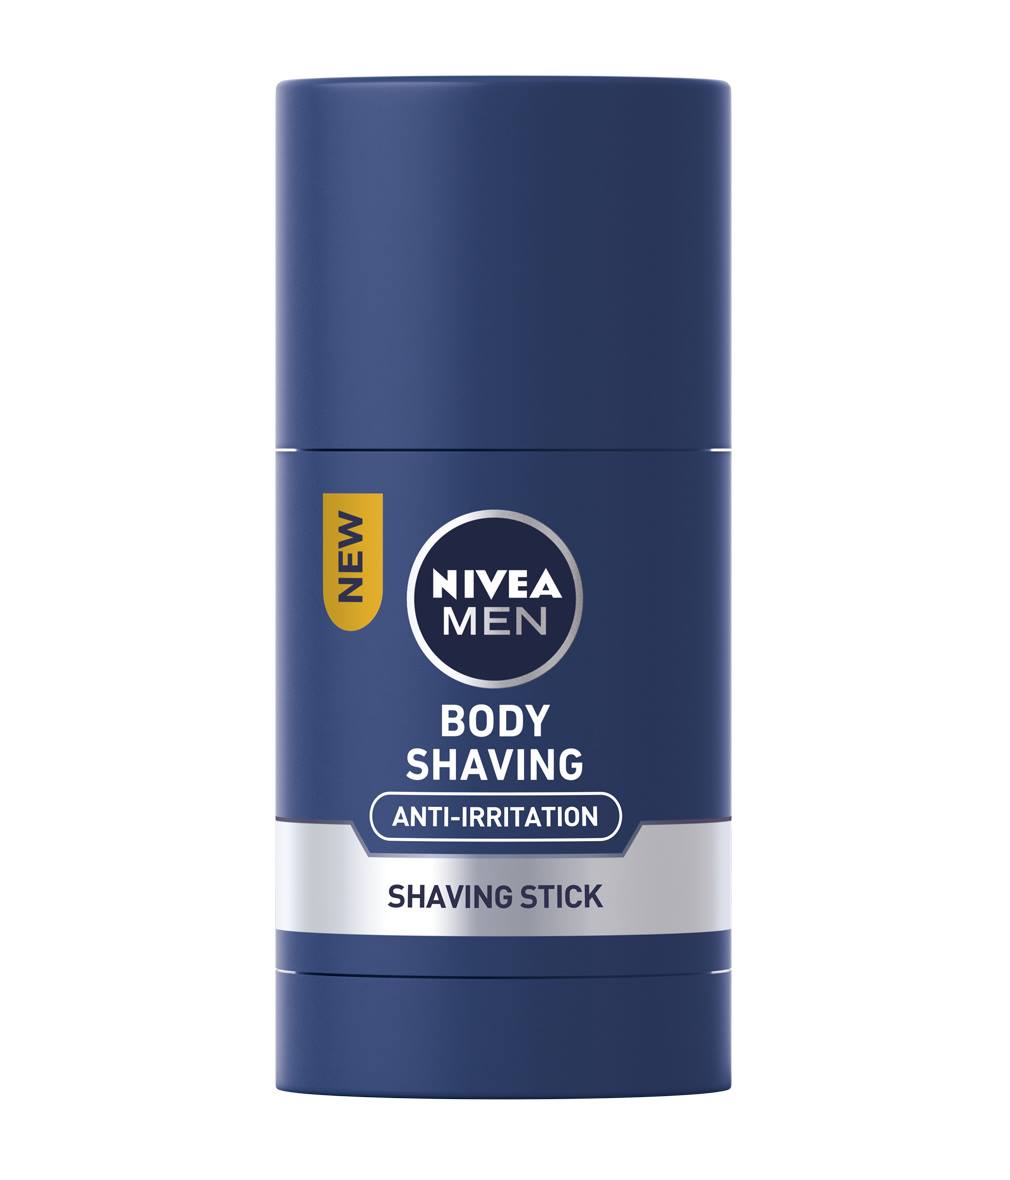 Shaving and Personal Care Products Logo - NIVEA MEN ANTI-IRRITATION | Body Shaving | NIVEA MEN